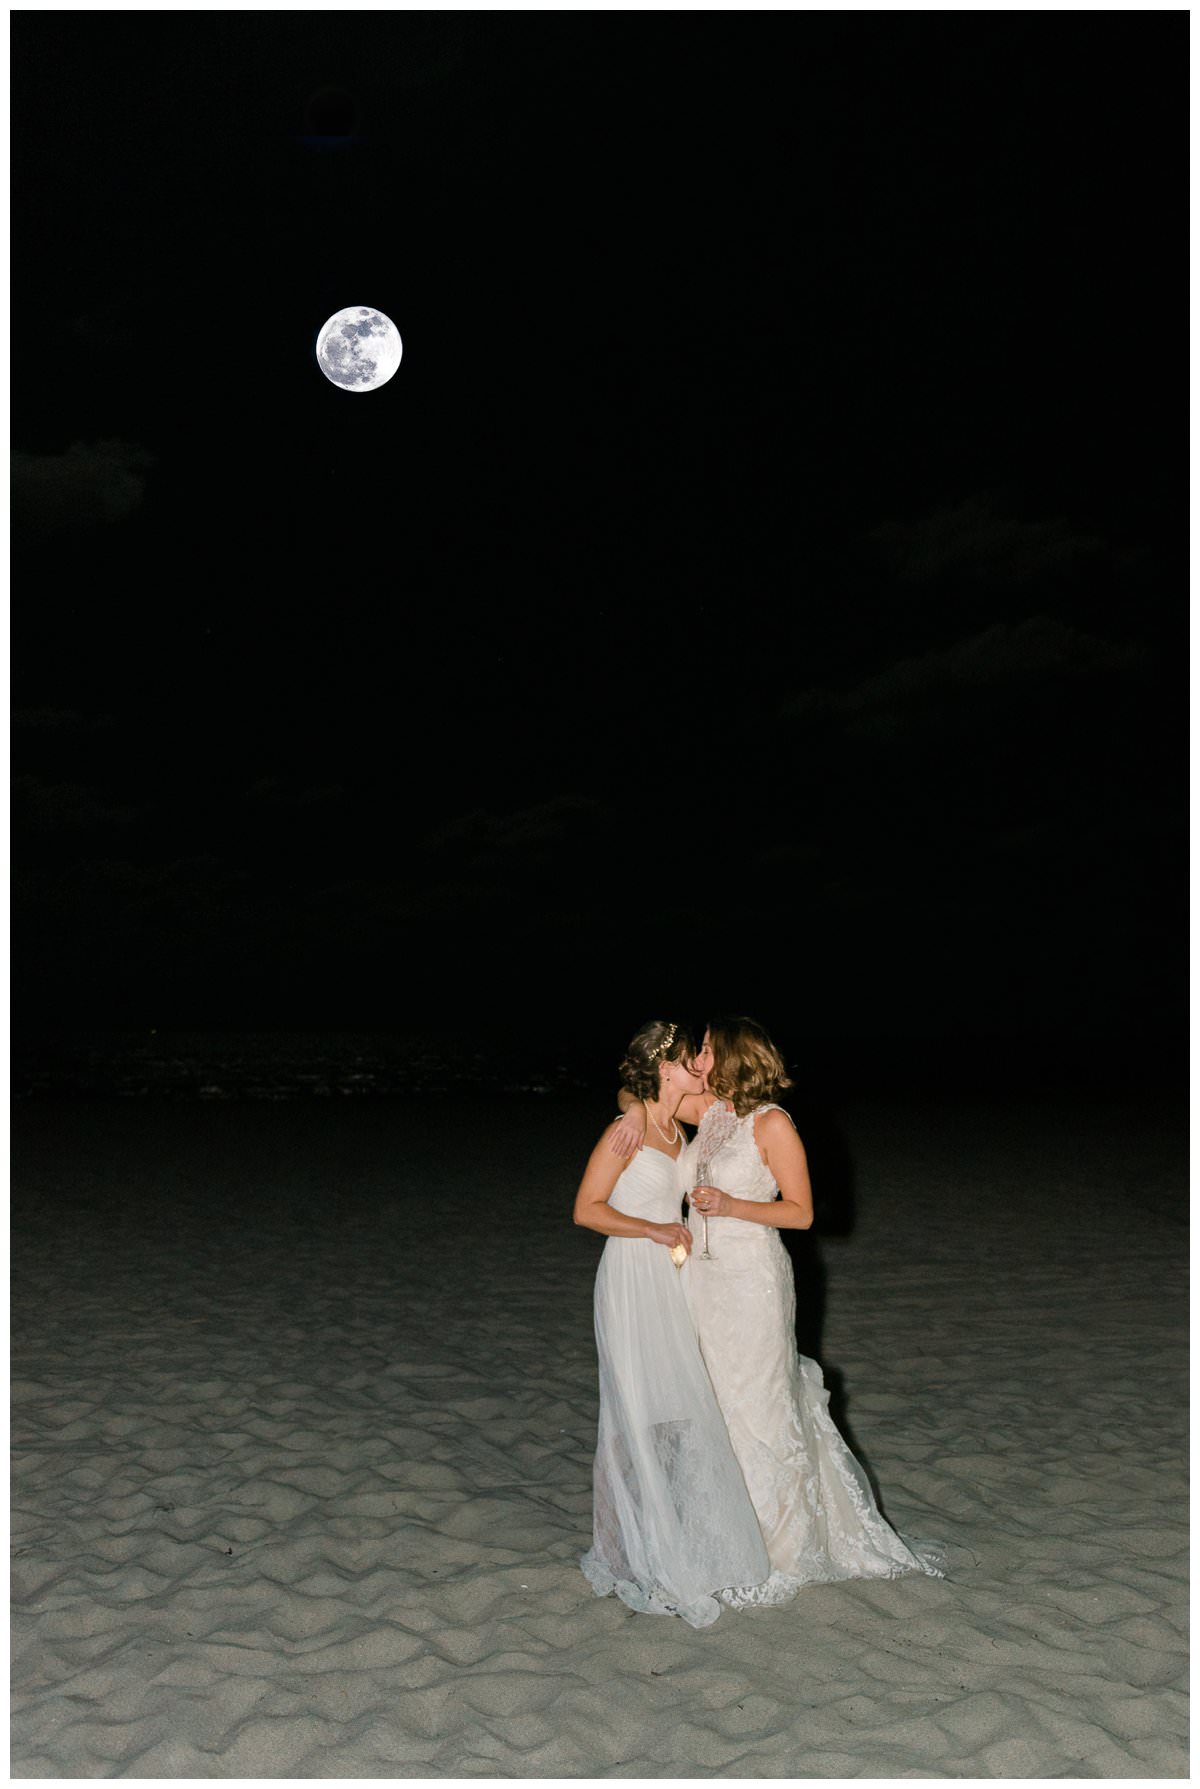 wedding photo on the beach under full moon